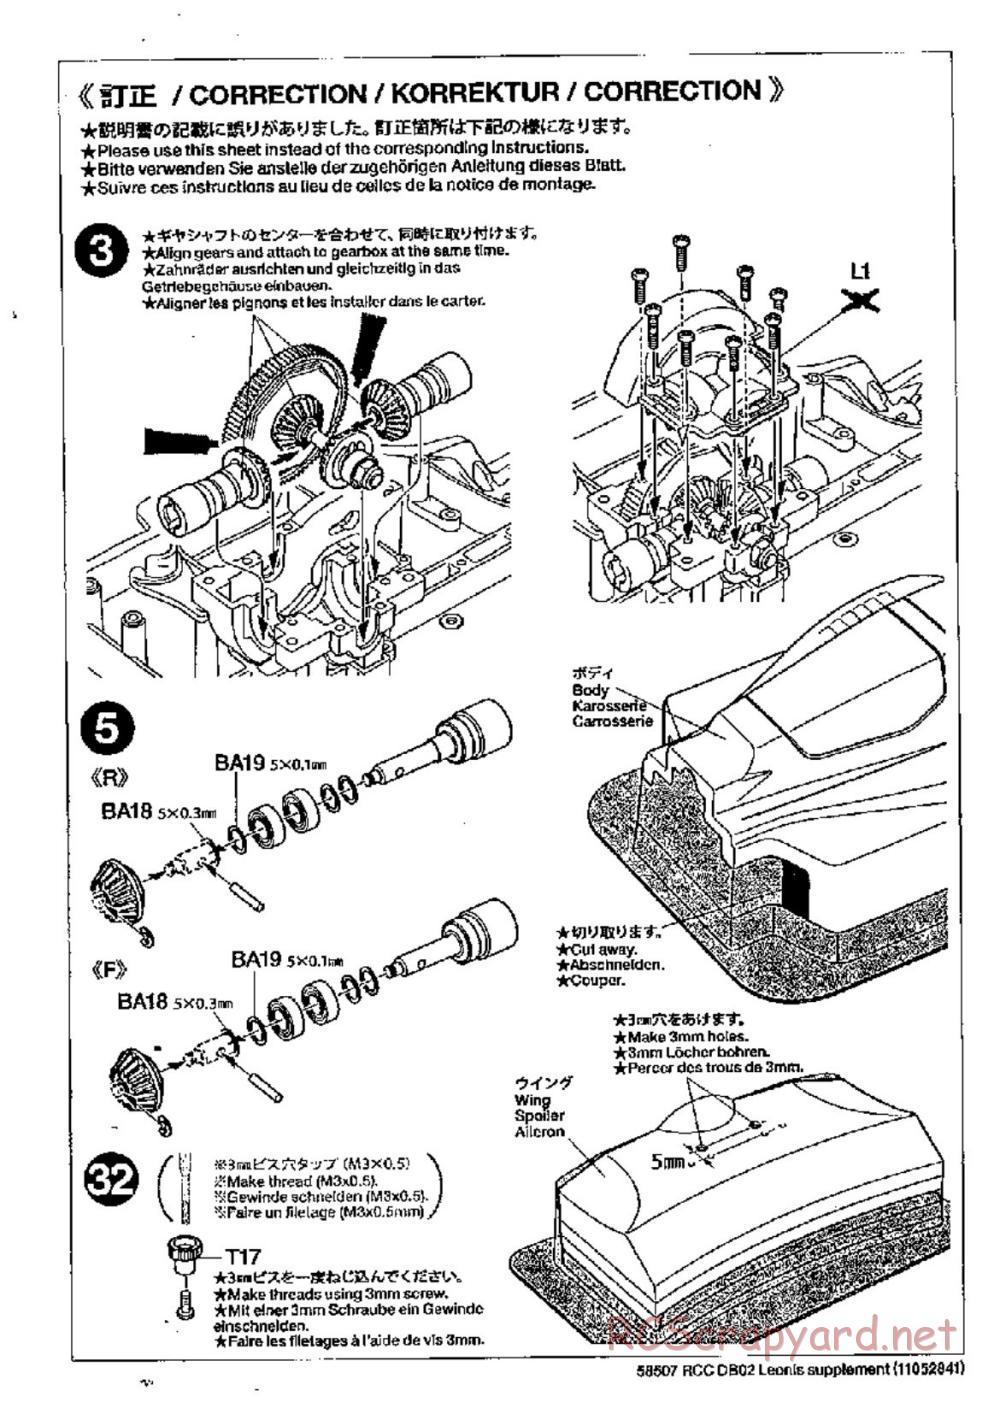 Tamiya - Leonis - DB-02 Chassis - Manual - Page 31